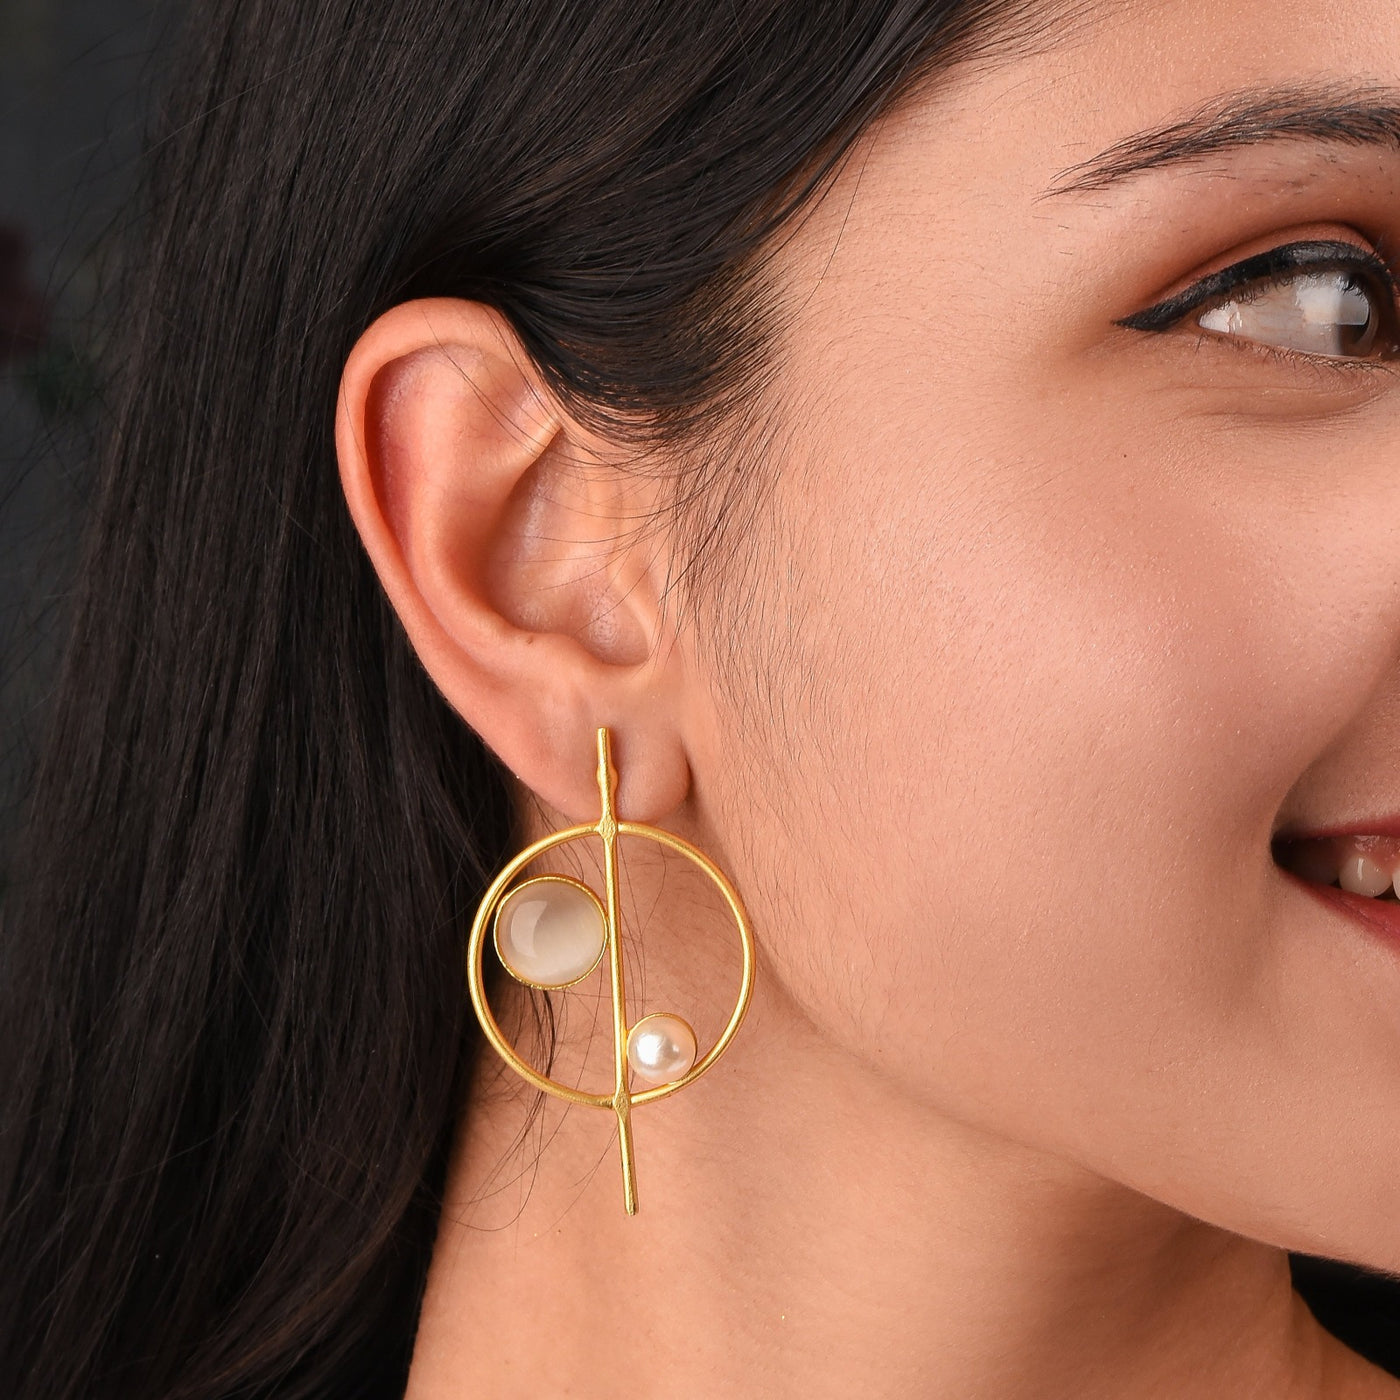 Galaxy Gold Stud Earrings - xoiox